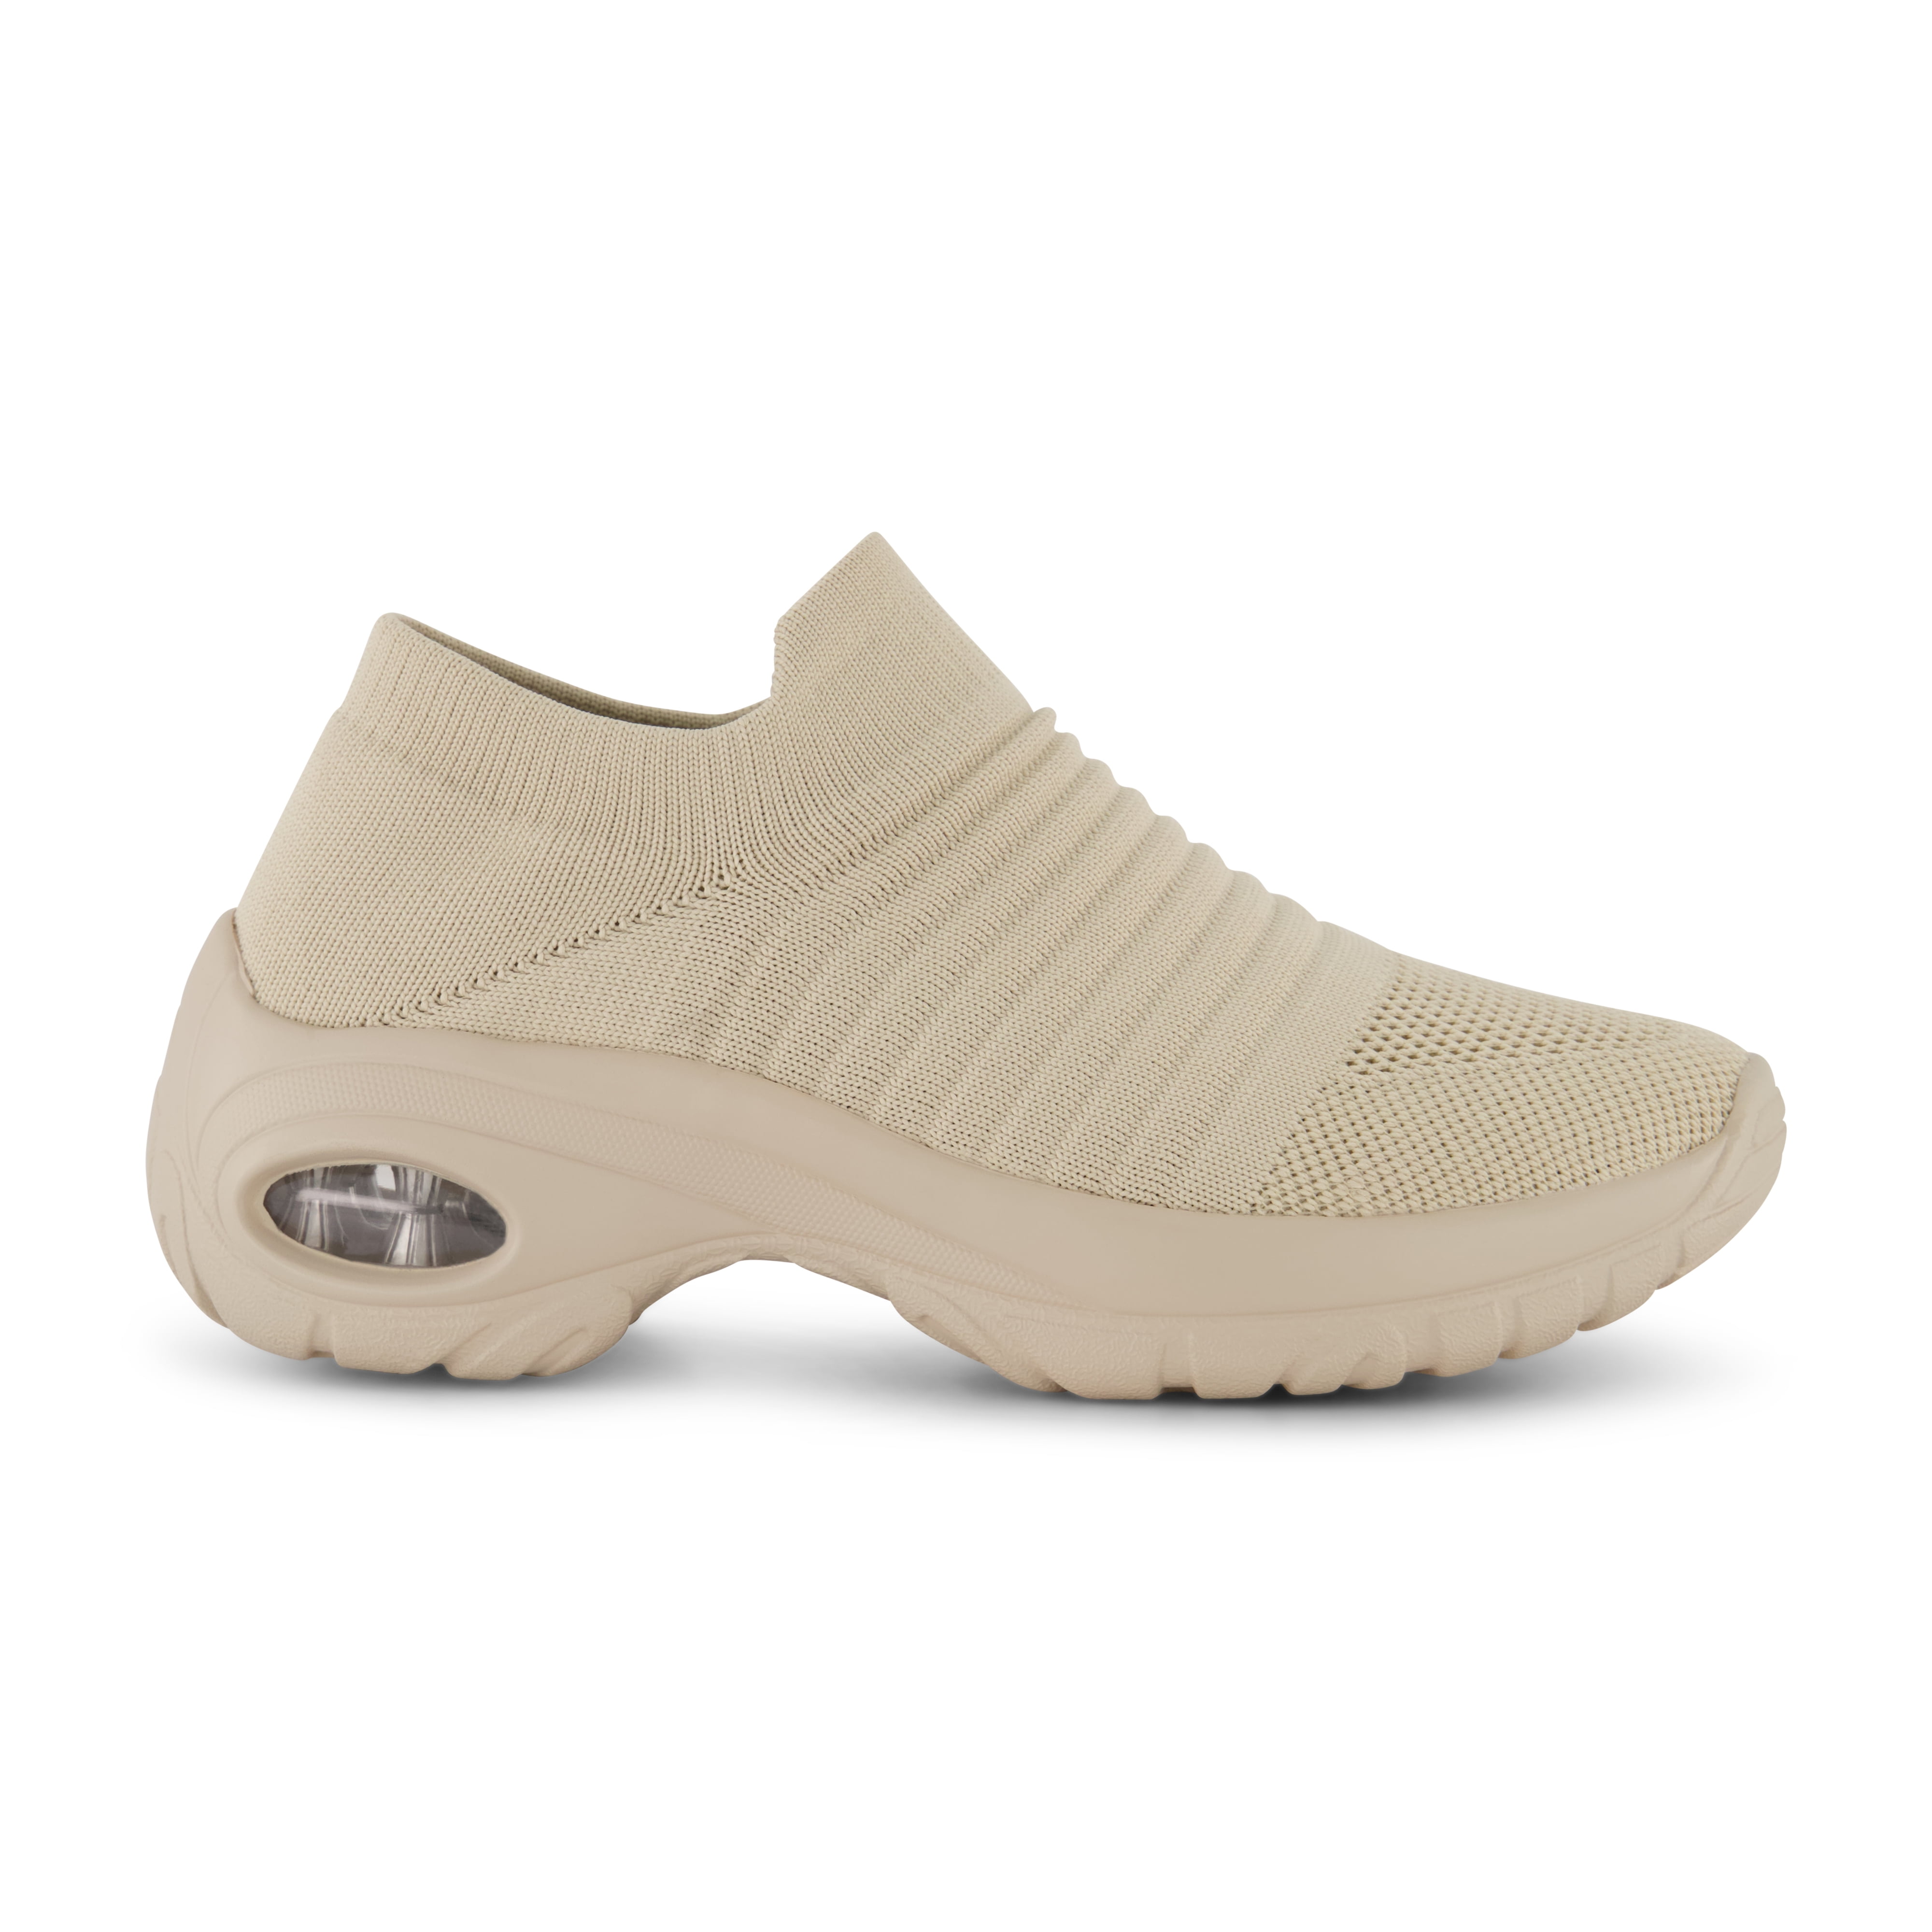 Unisex Athletic Memory Foam Walking Shoes - Mens Womens Slip On